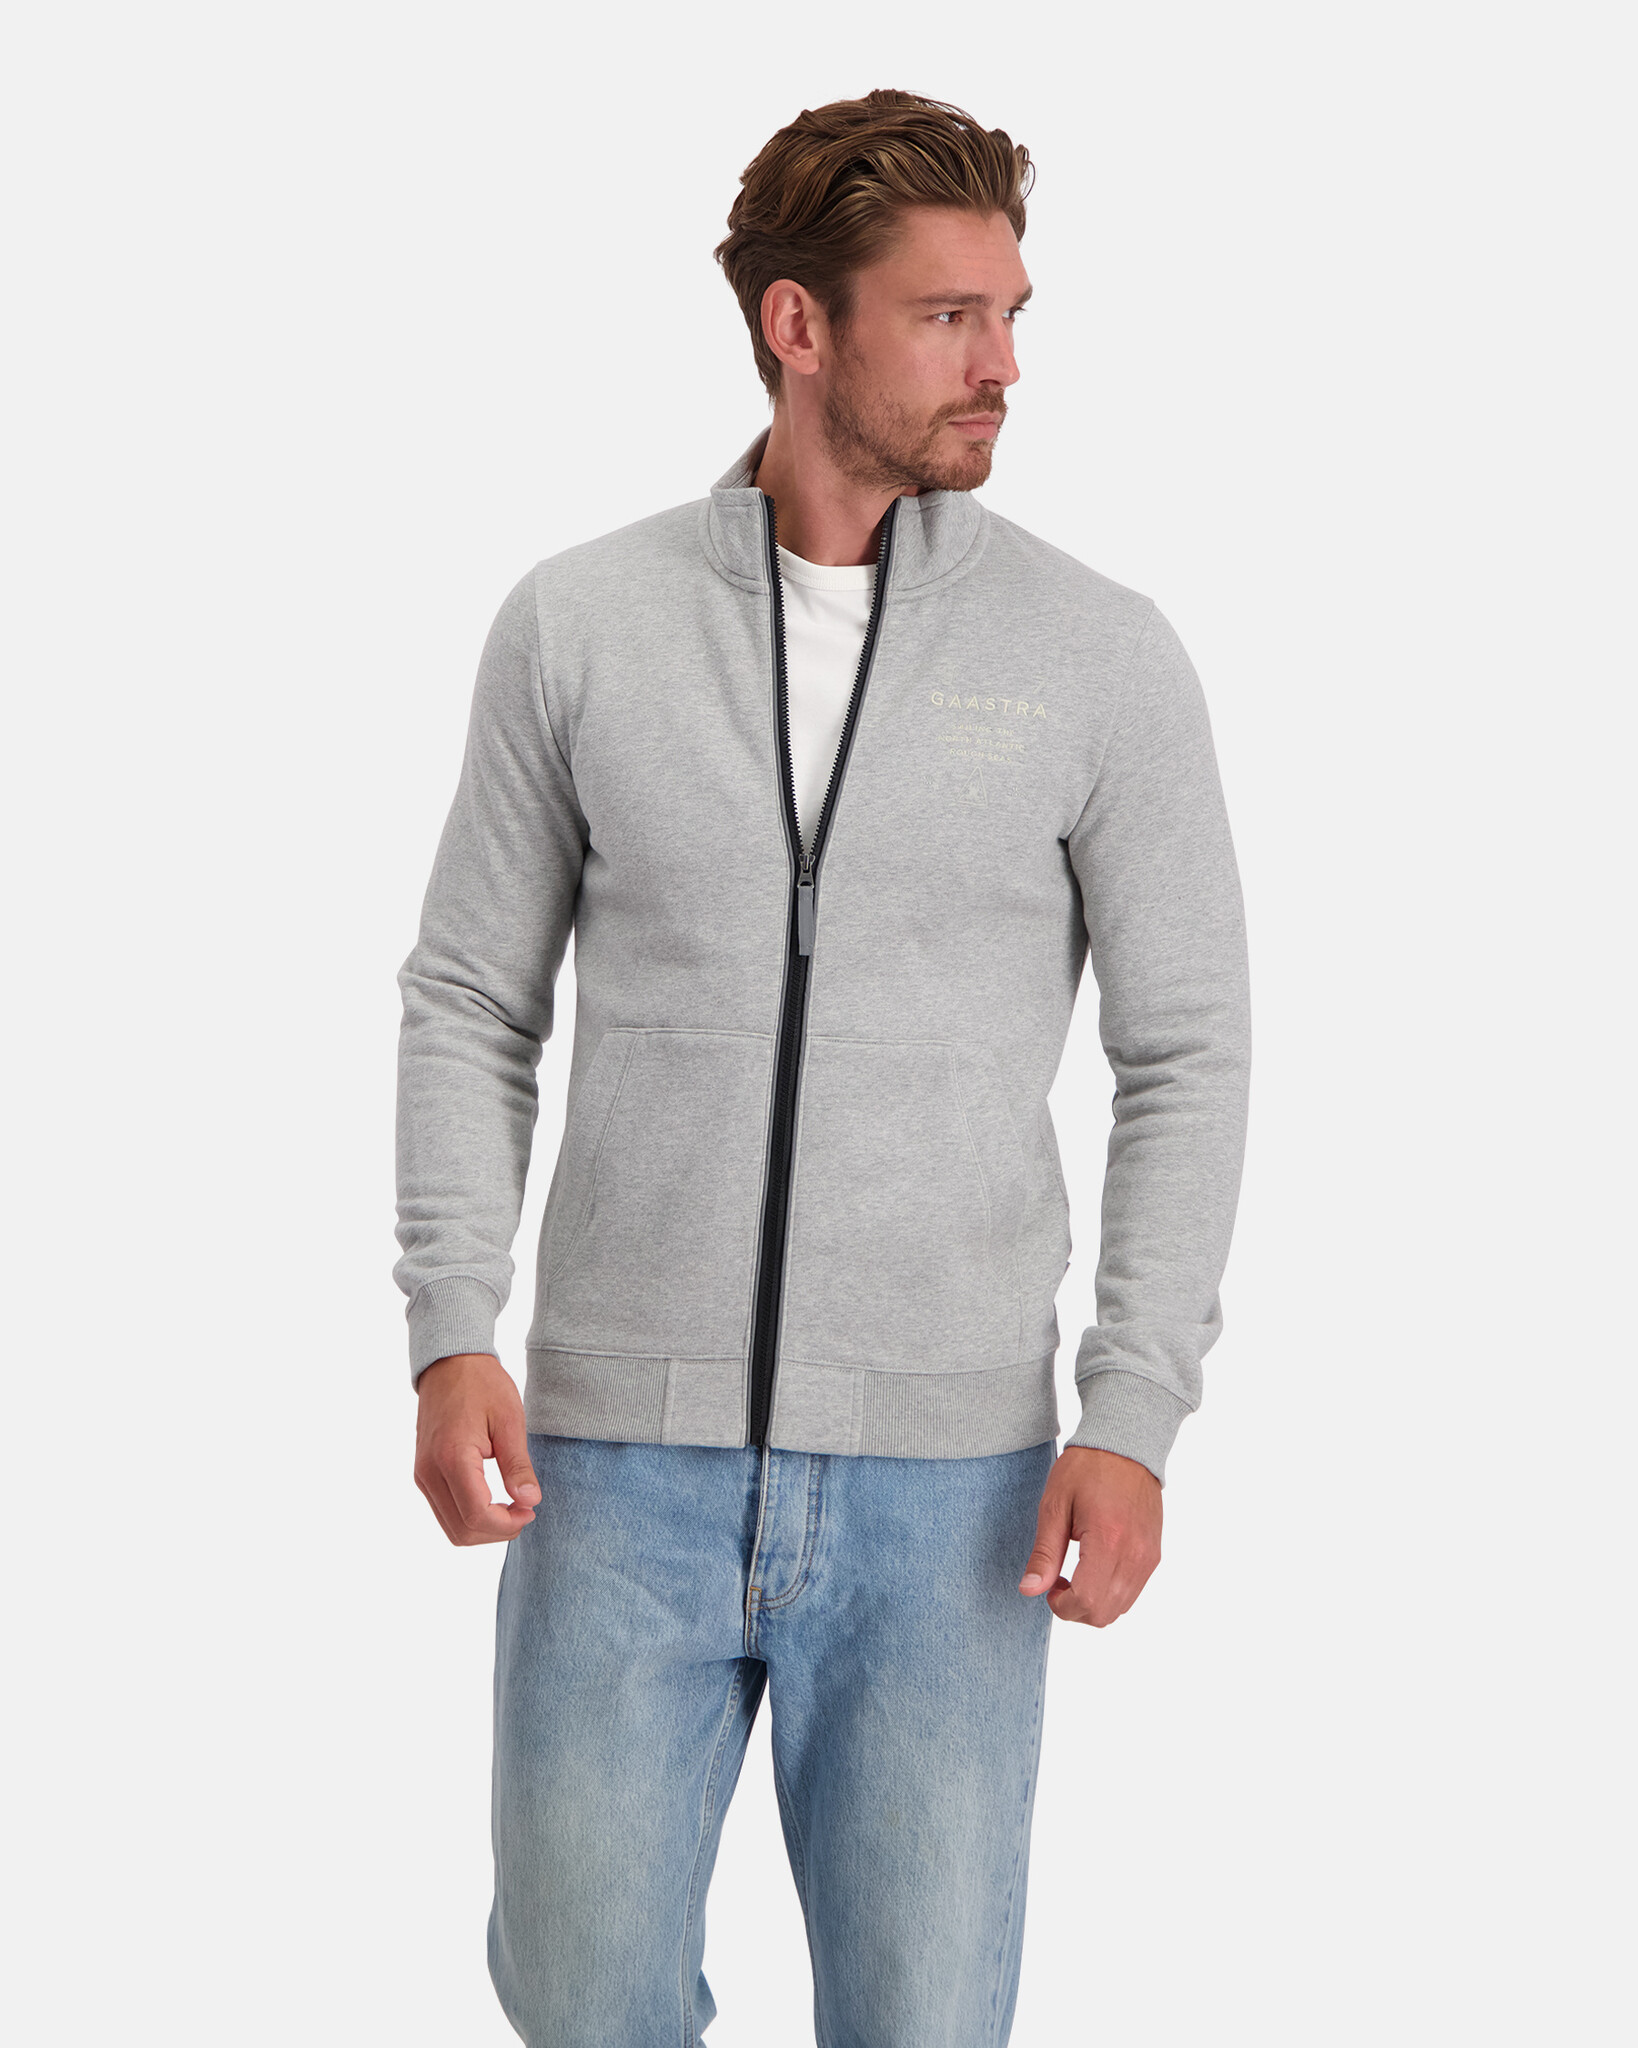 De luxe Shipshape jersey sweater